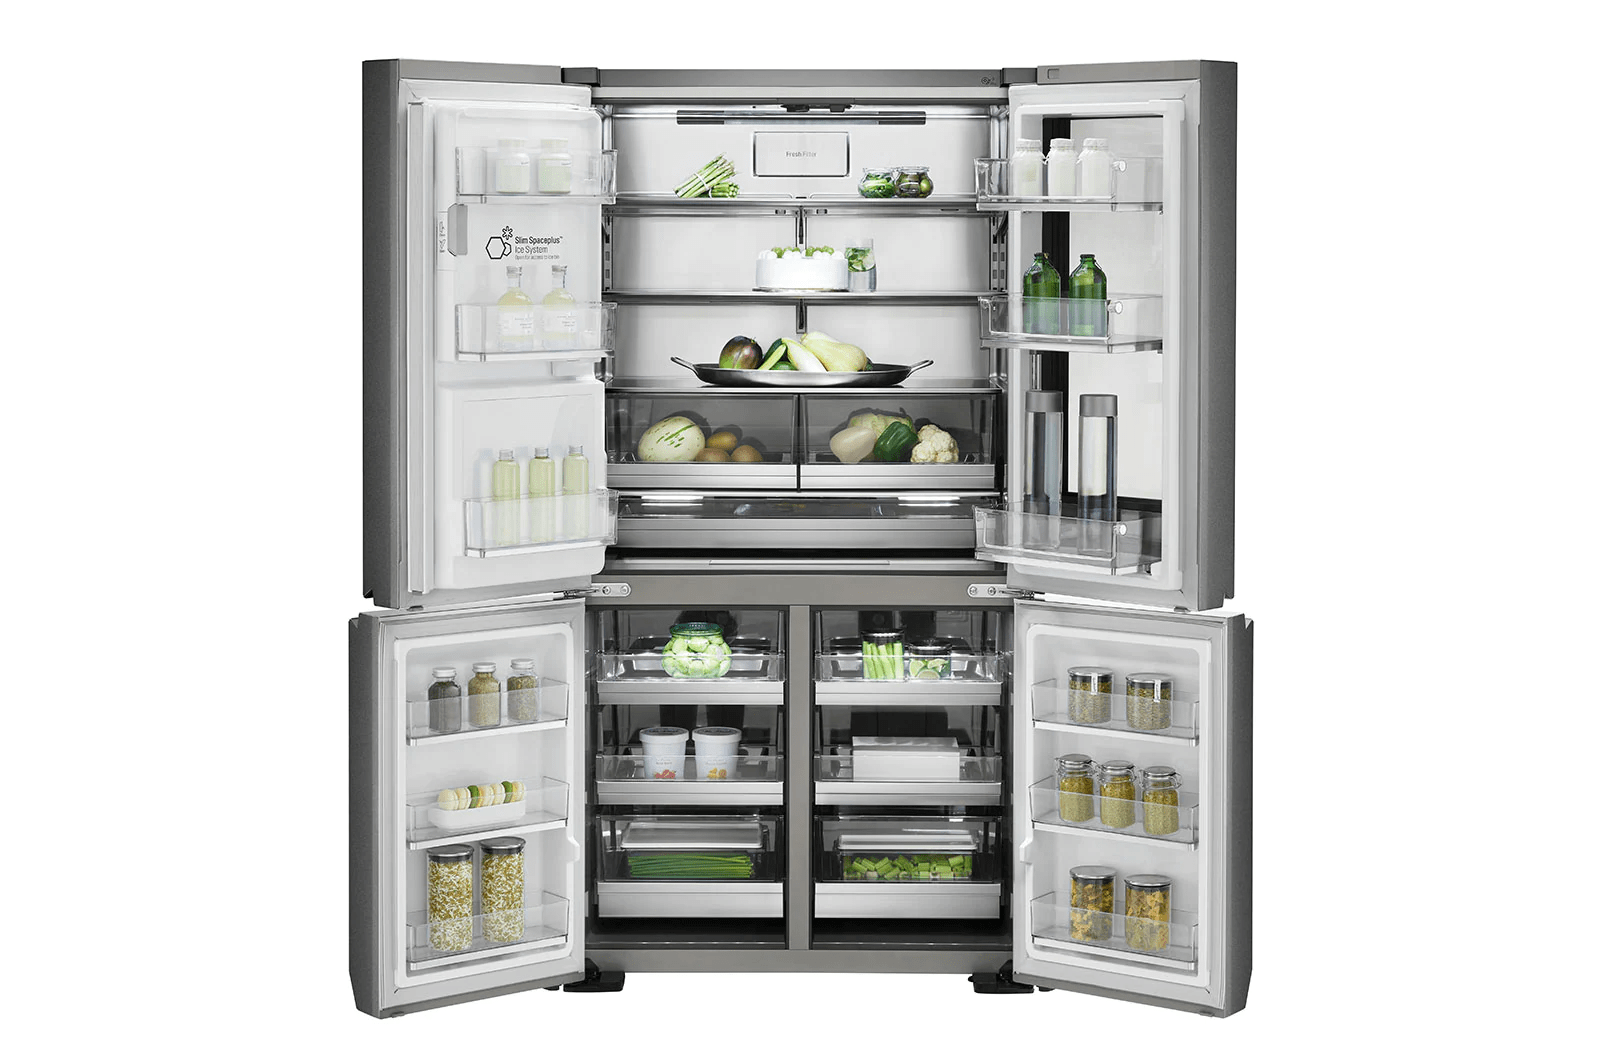 LG smart refrigerators